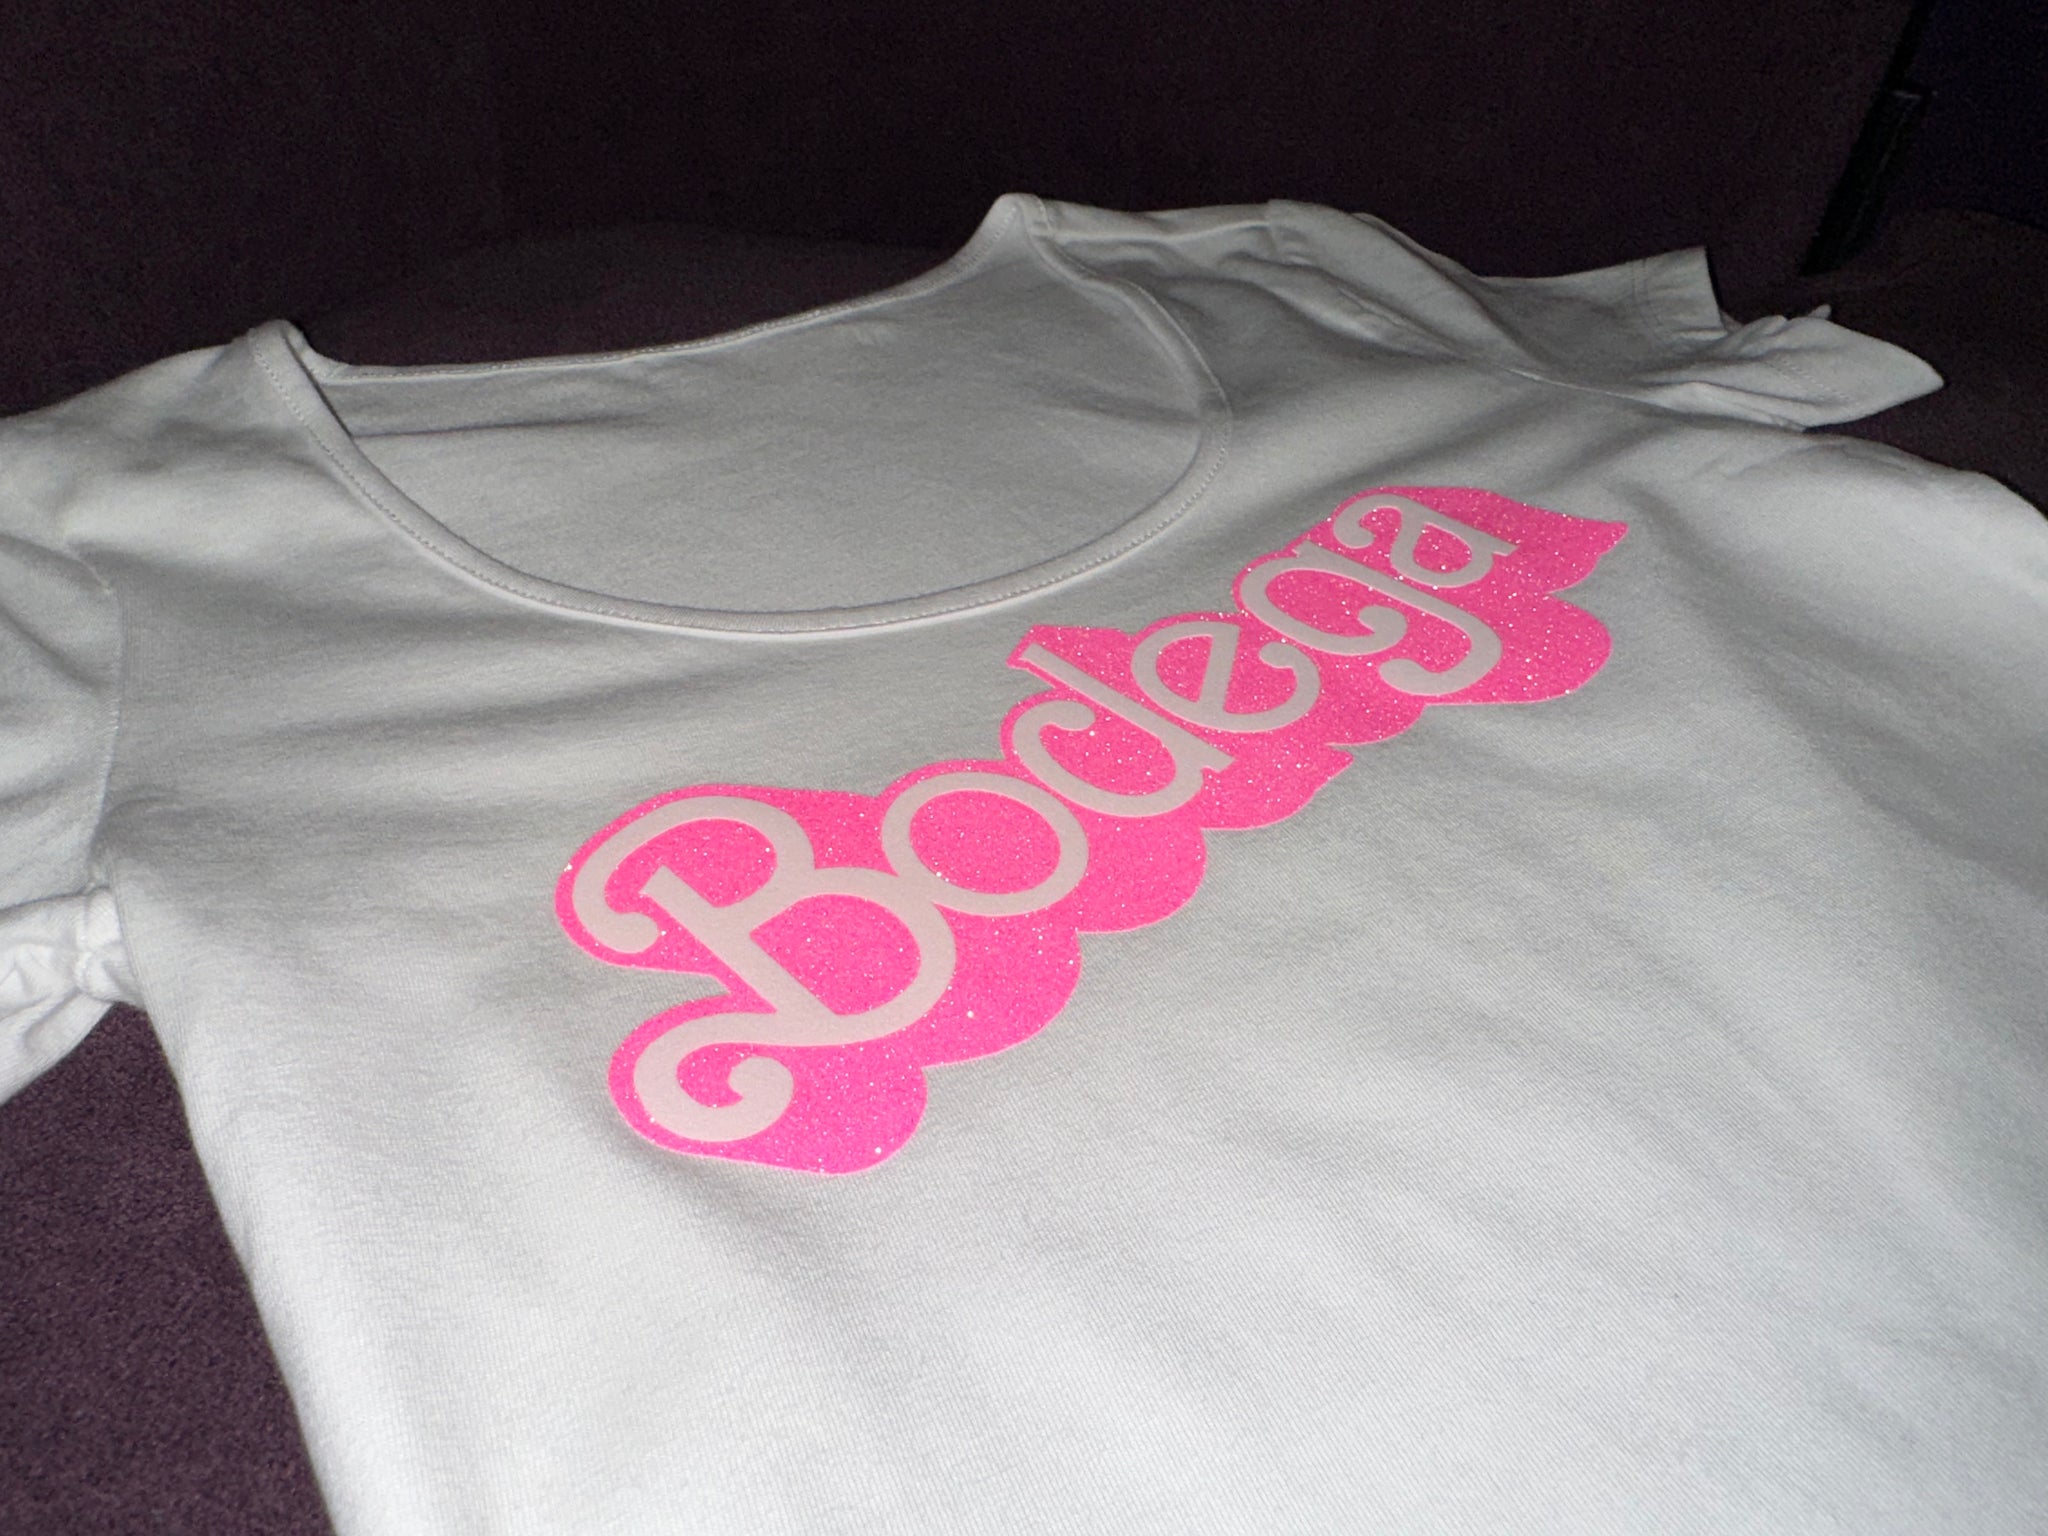 Bodega Barbie Shirt